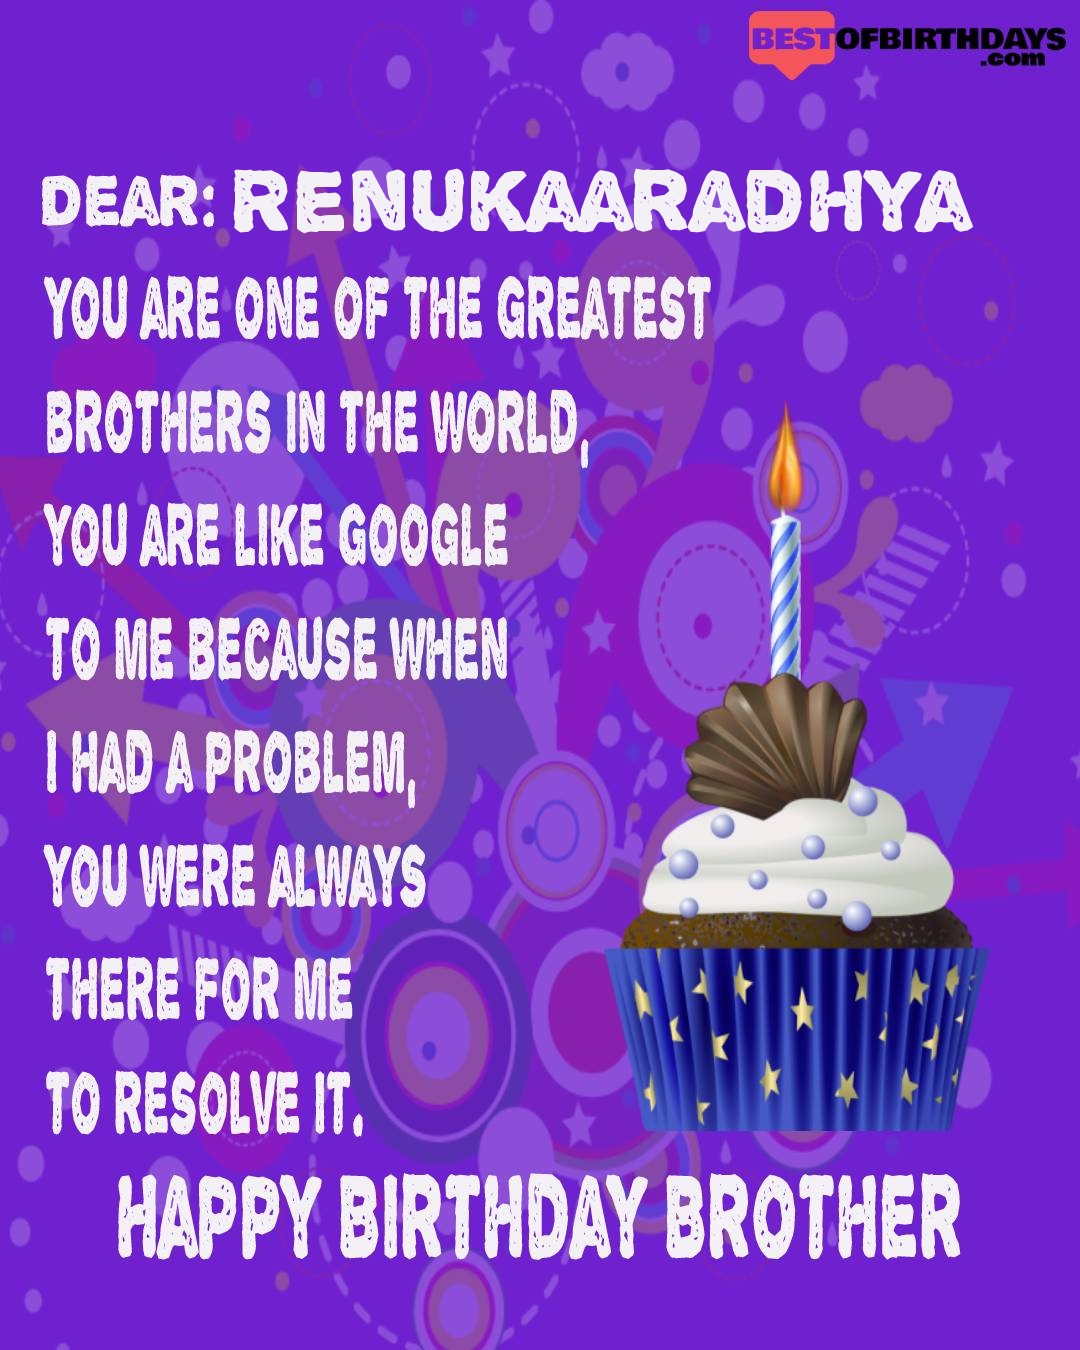 Happy birthday renukaaradhya bhai brother bro